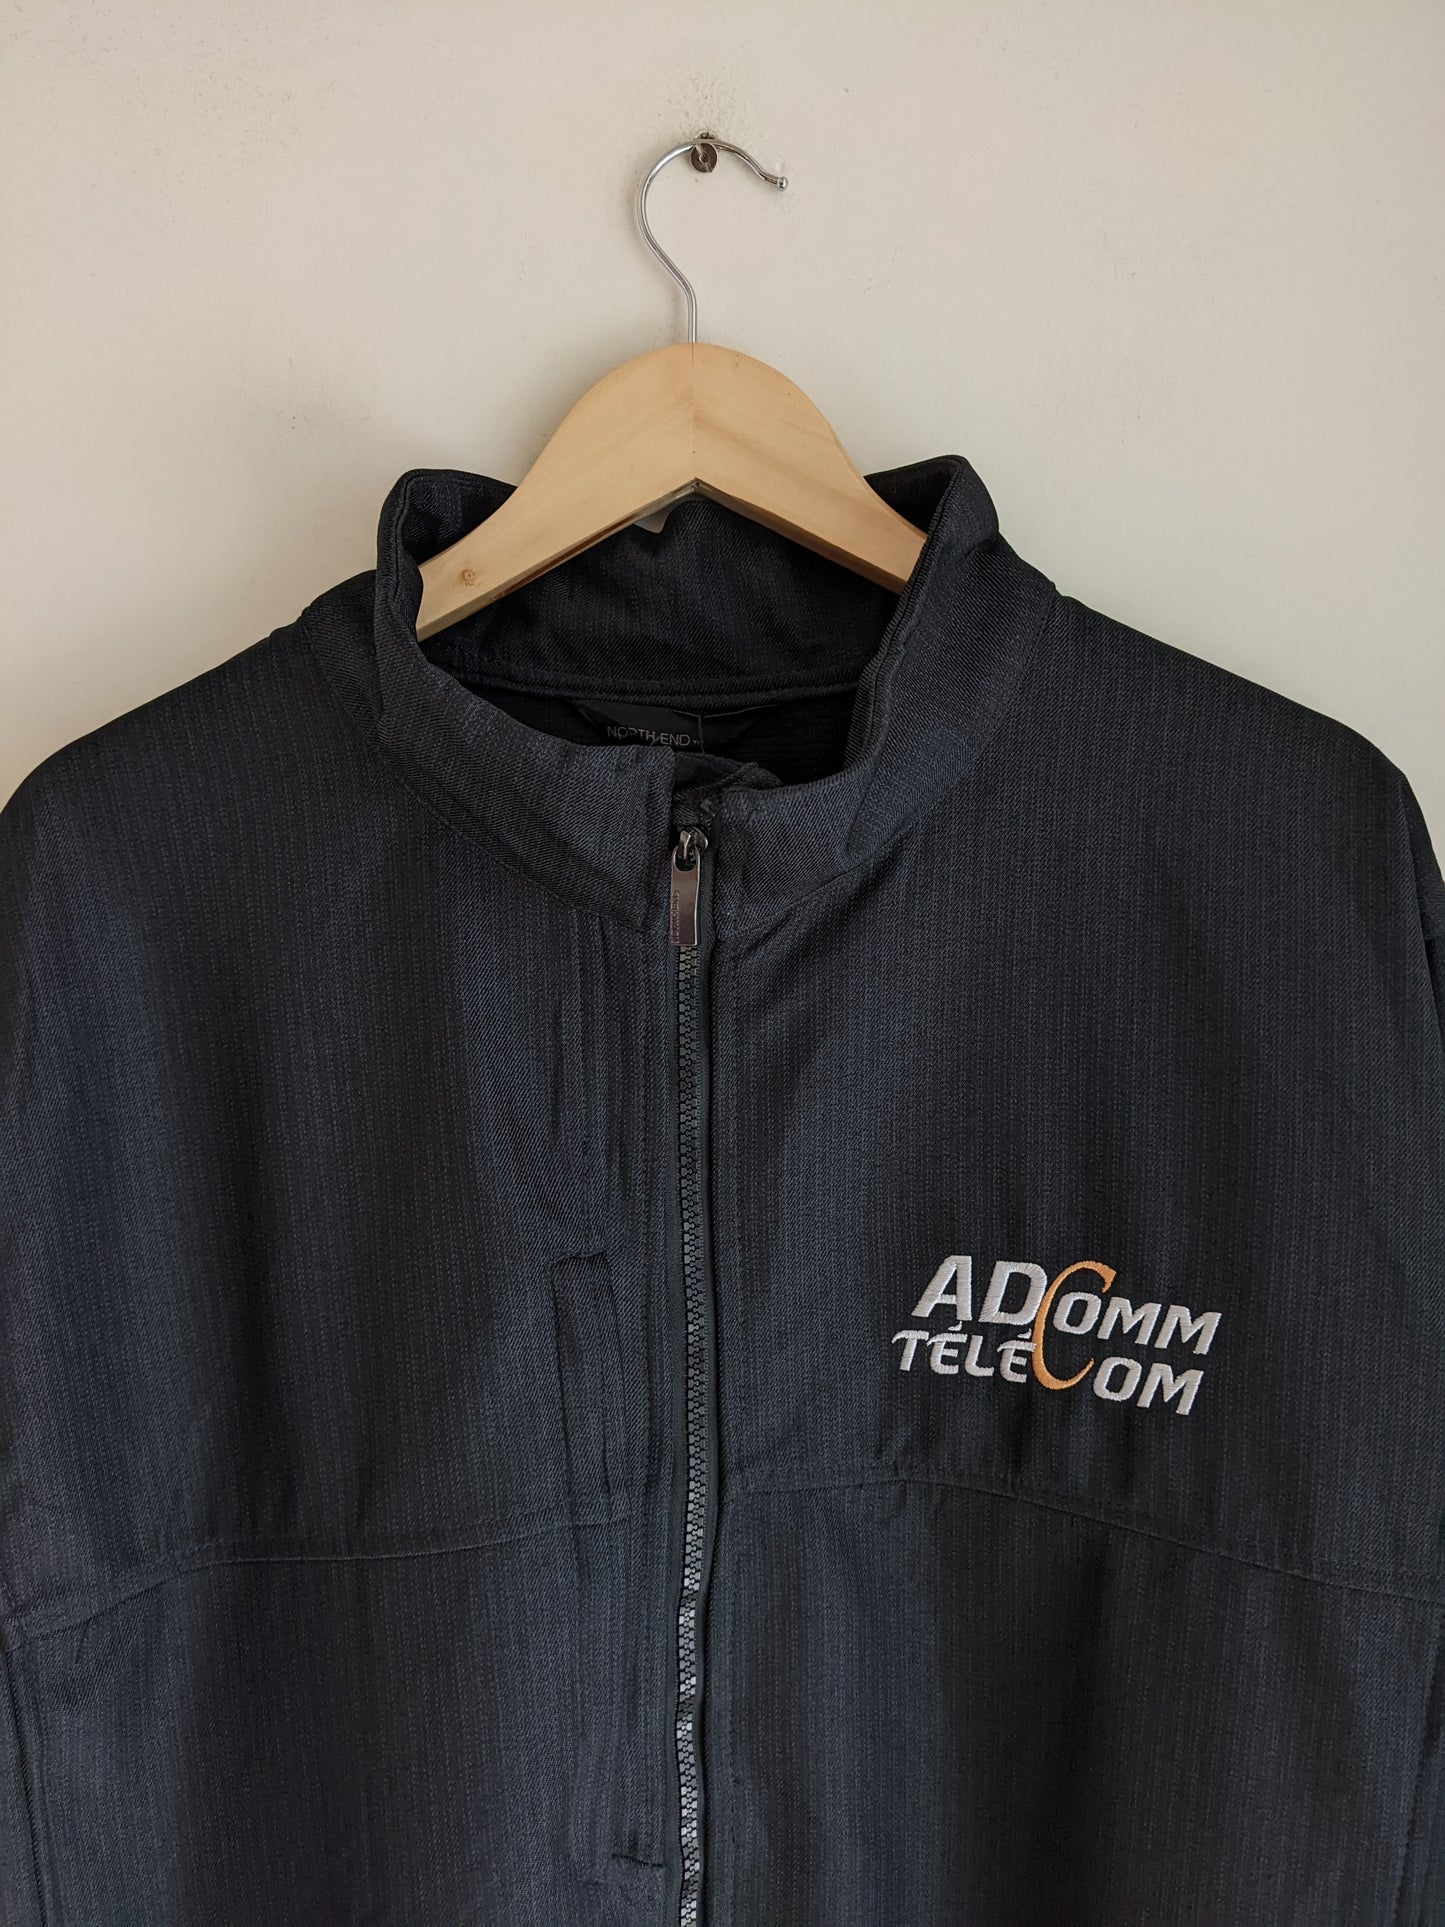 ADCOMM TELECOM Black Jacket